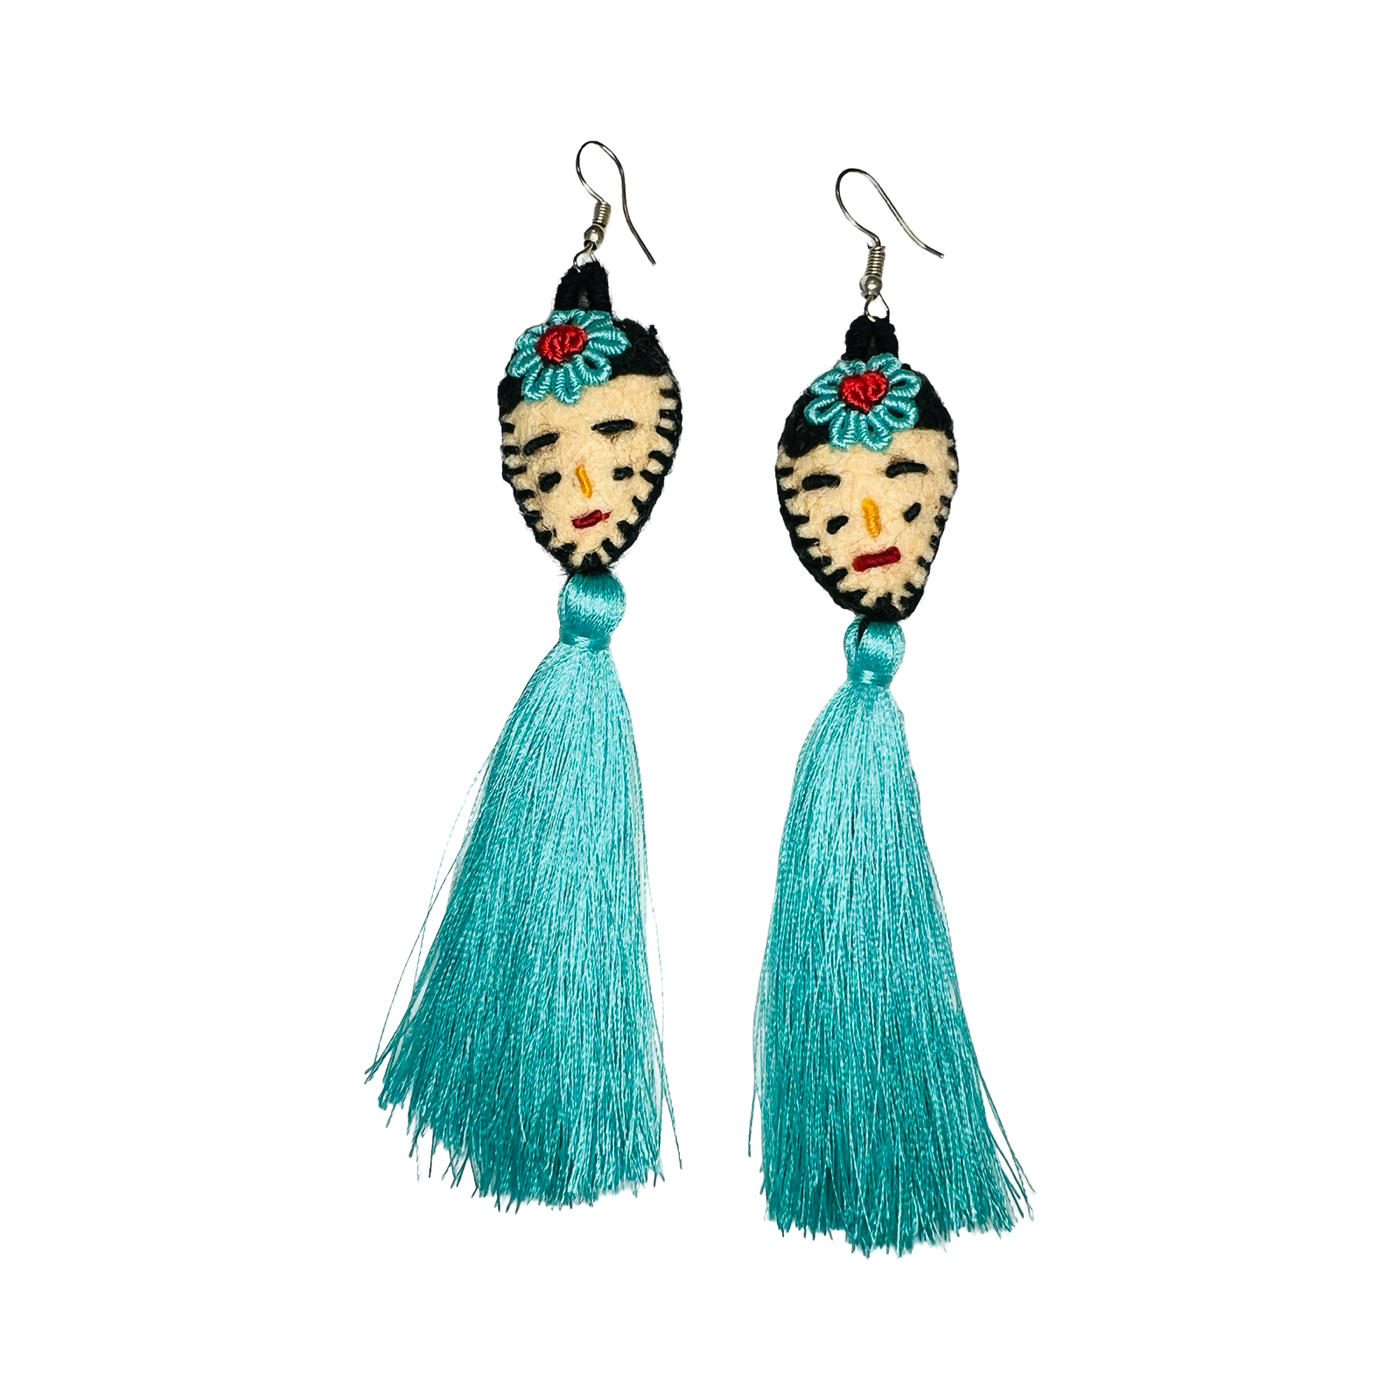 Teal set of felt Frida Kahlo tassle earrings.